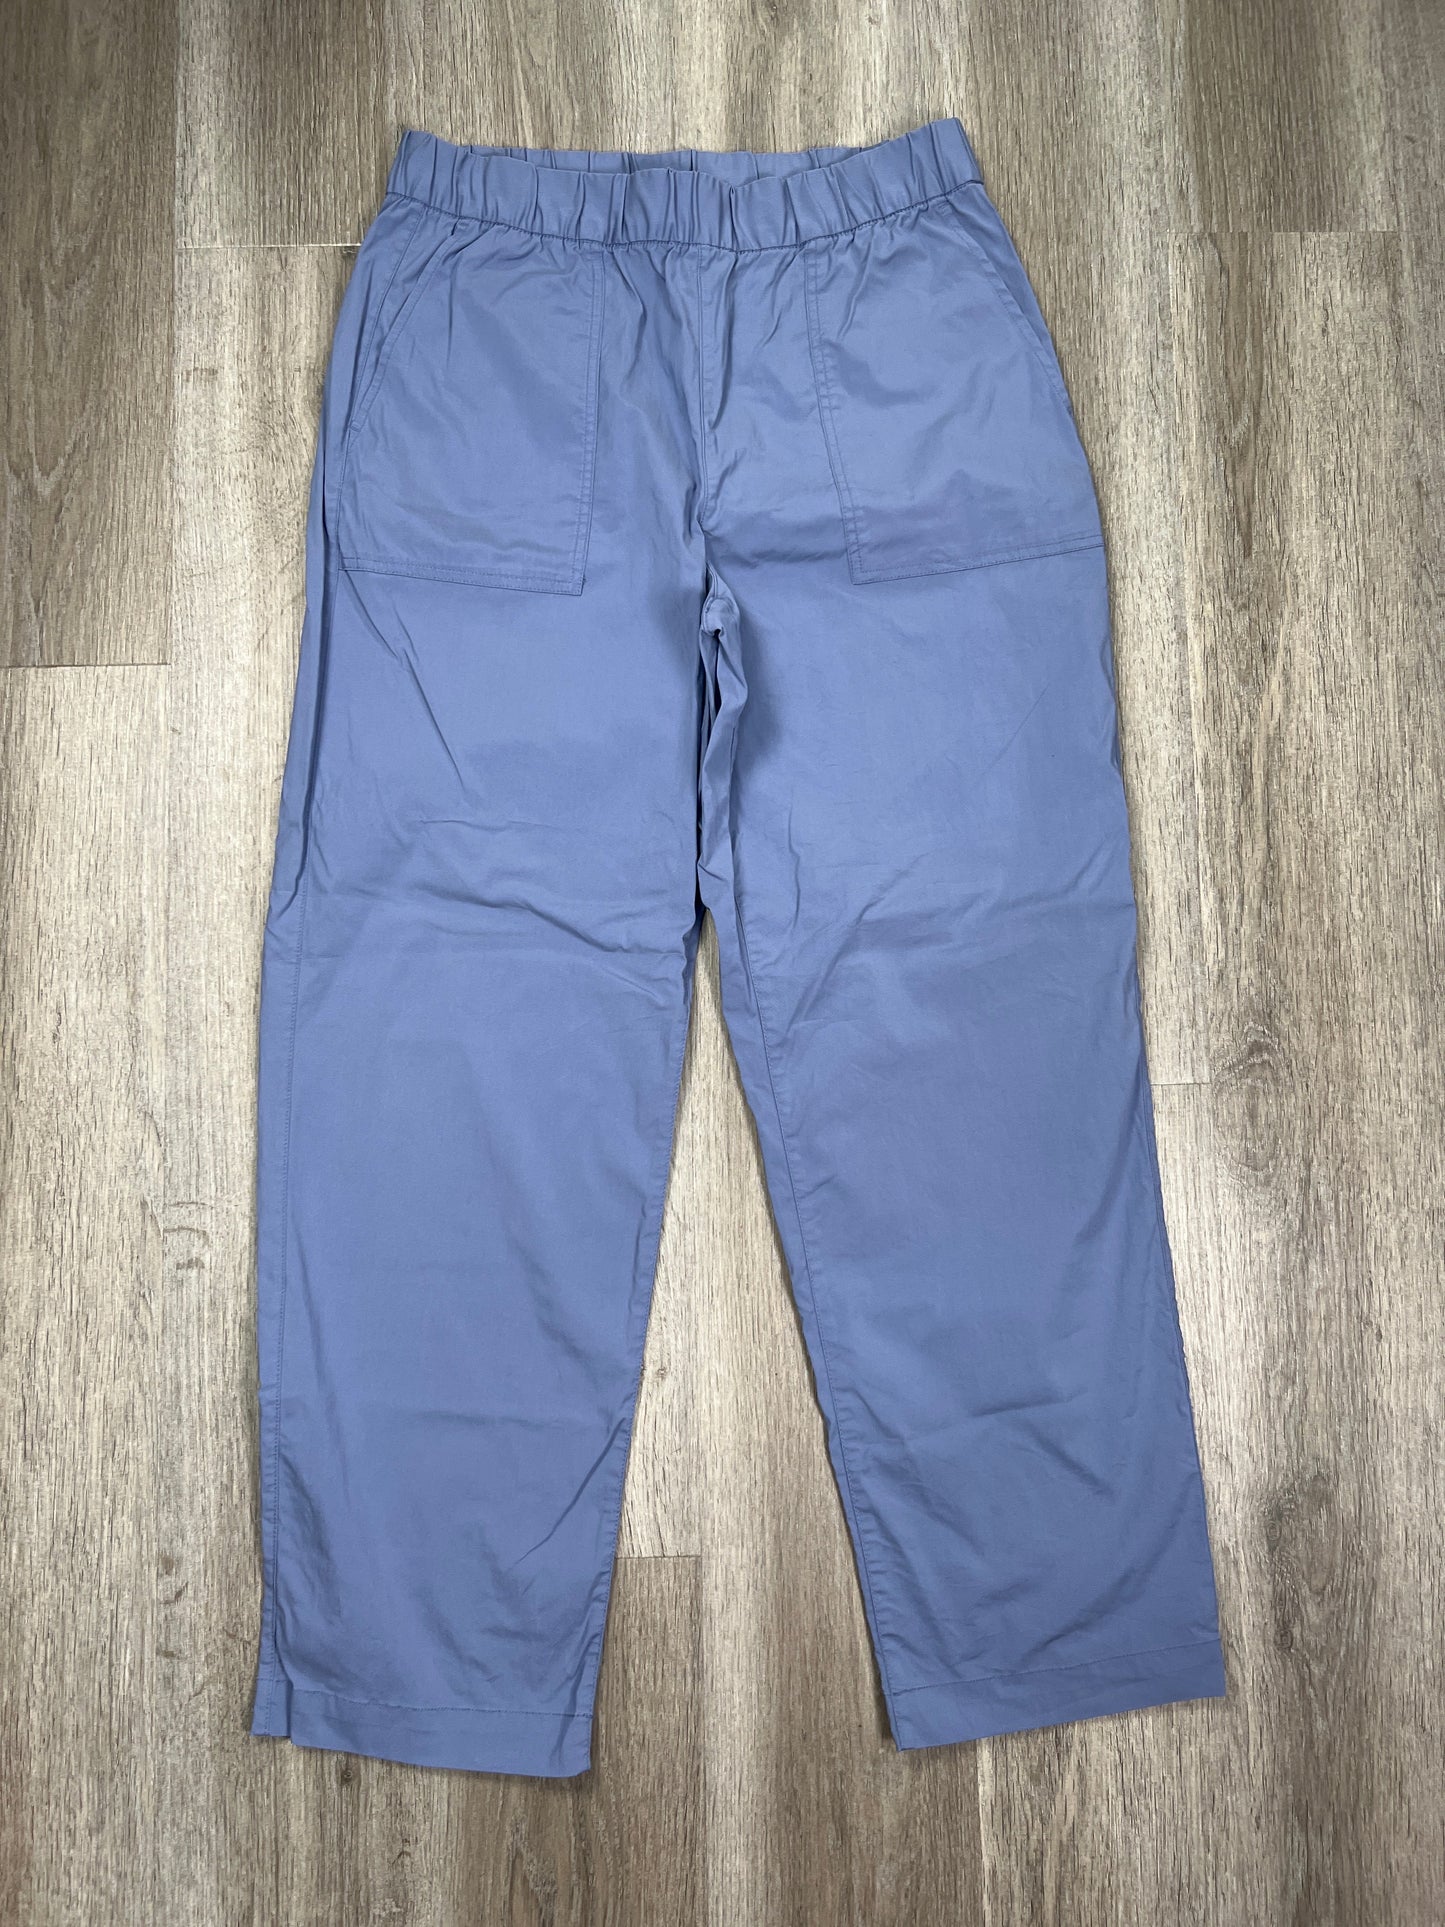 Blue Pants Cargo & Utility Gap, Size L